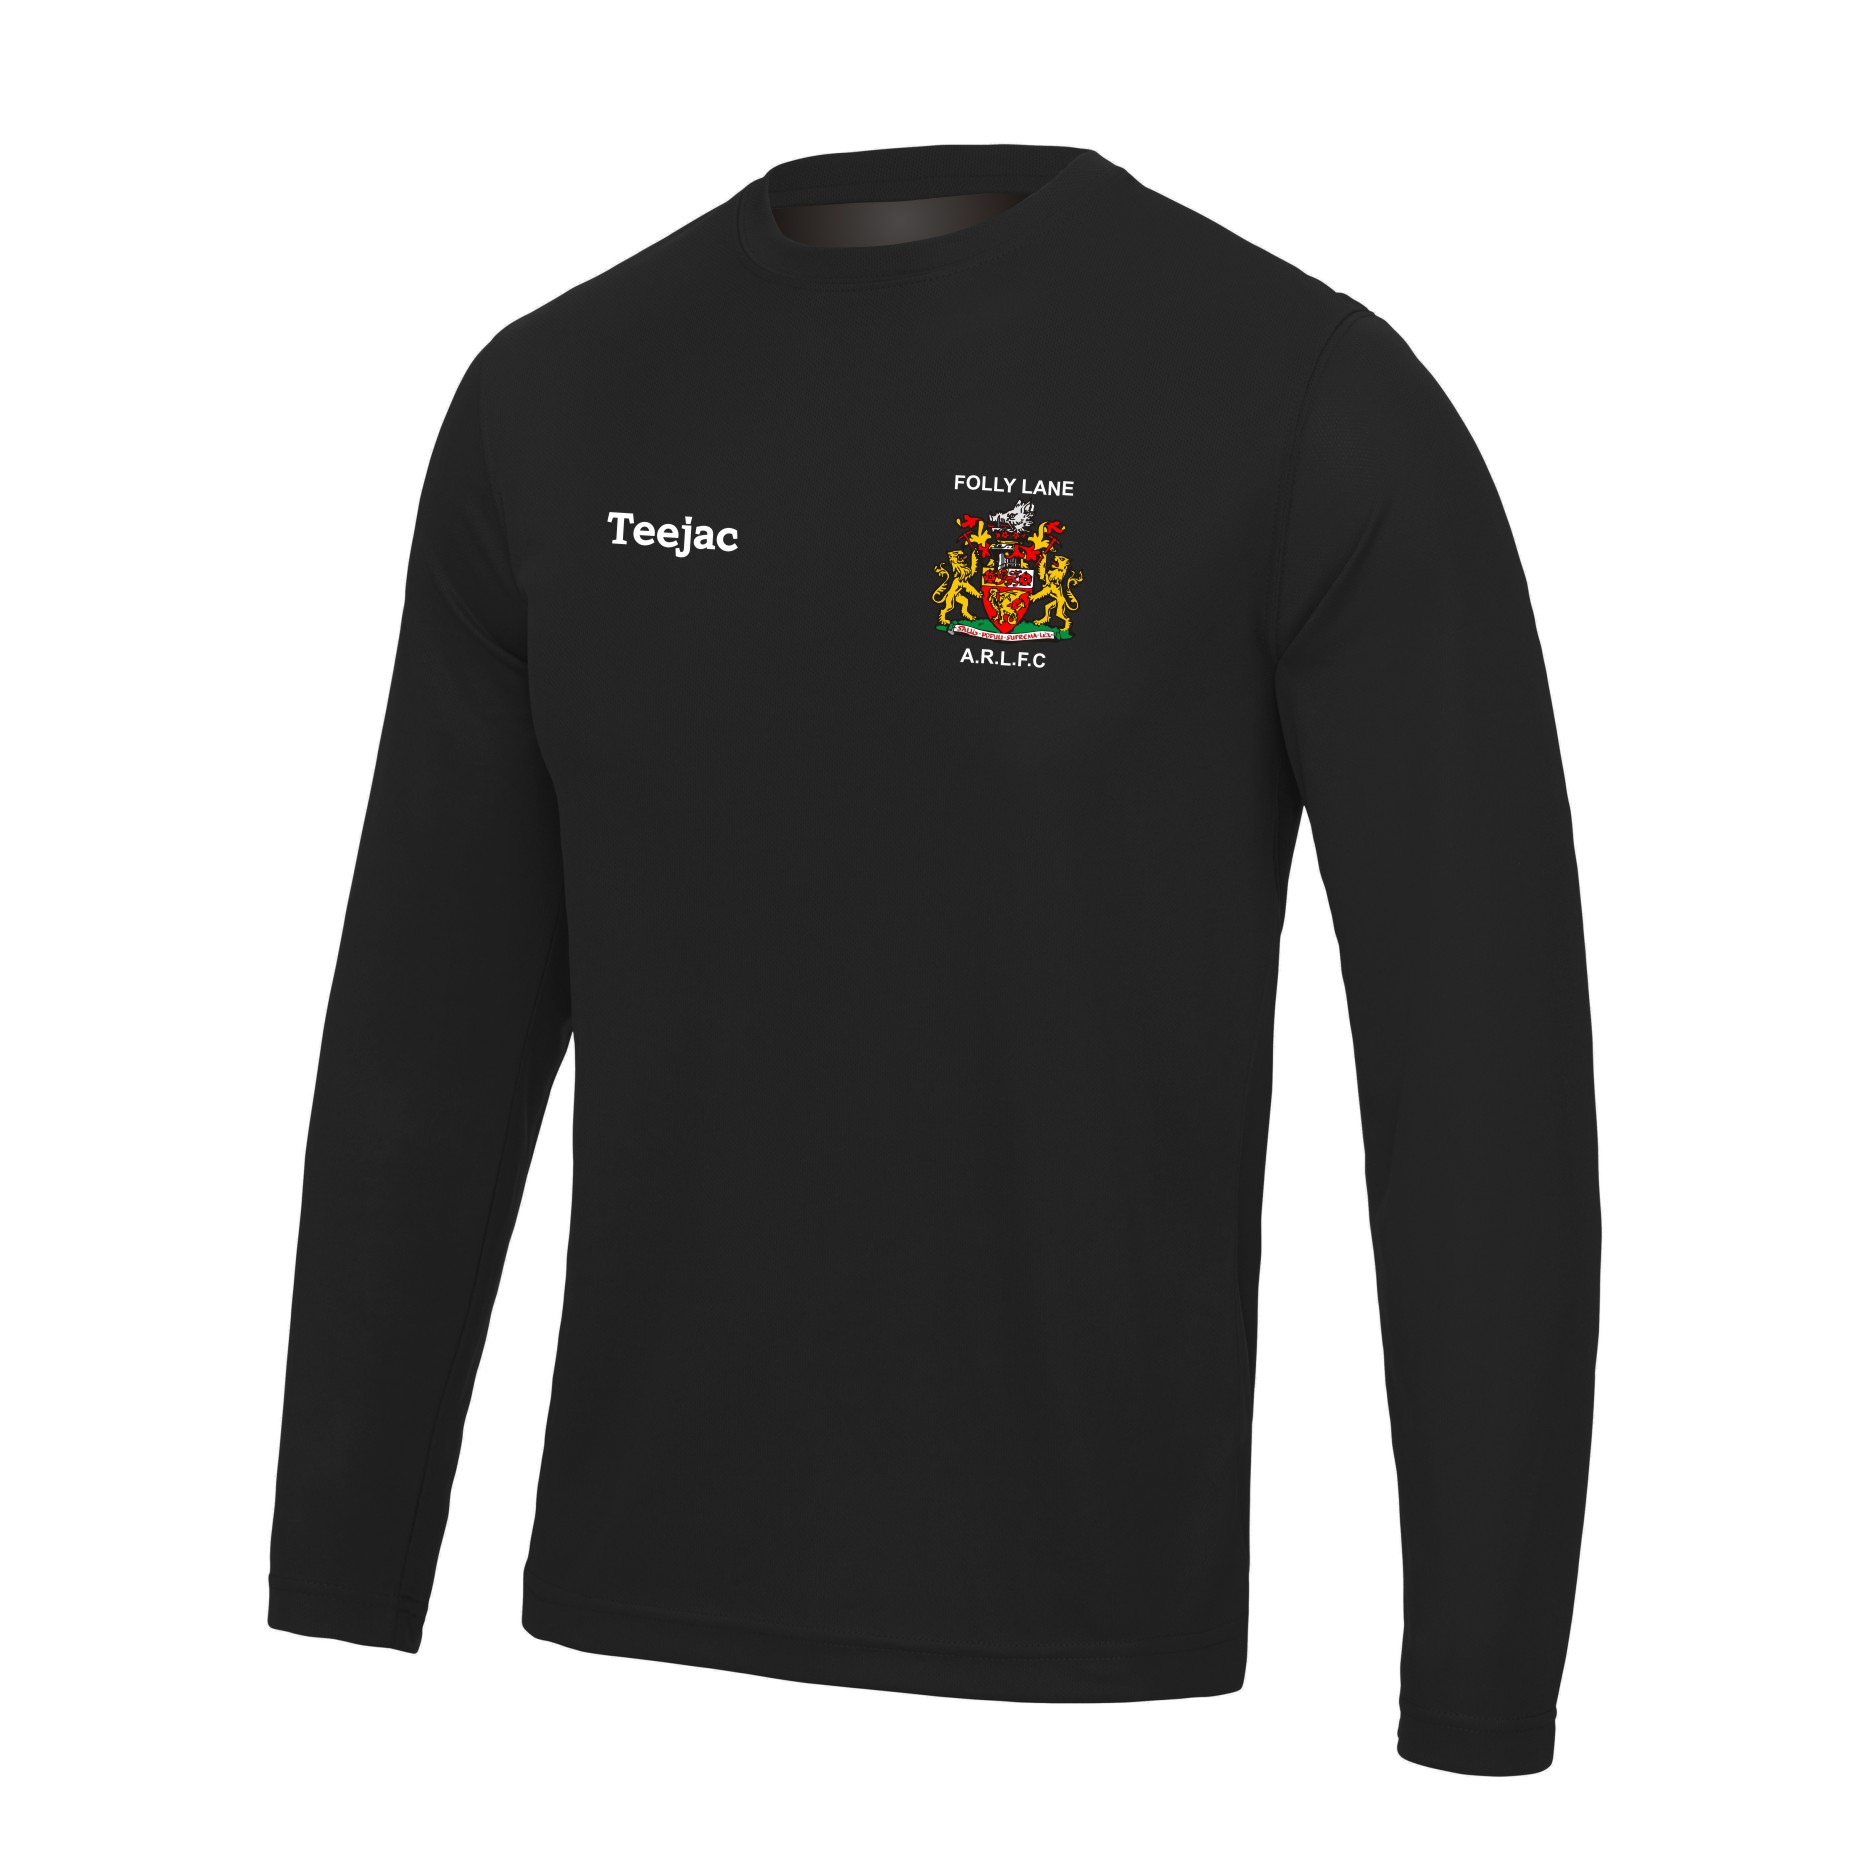 Folly Lane ARLFC Long Sleeve Sports T-Shirt - Teejac